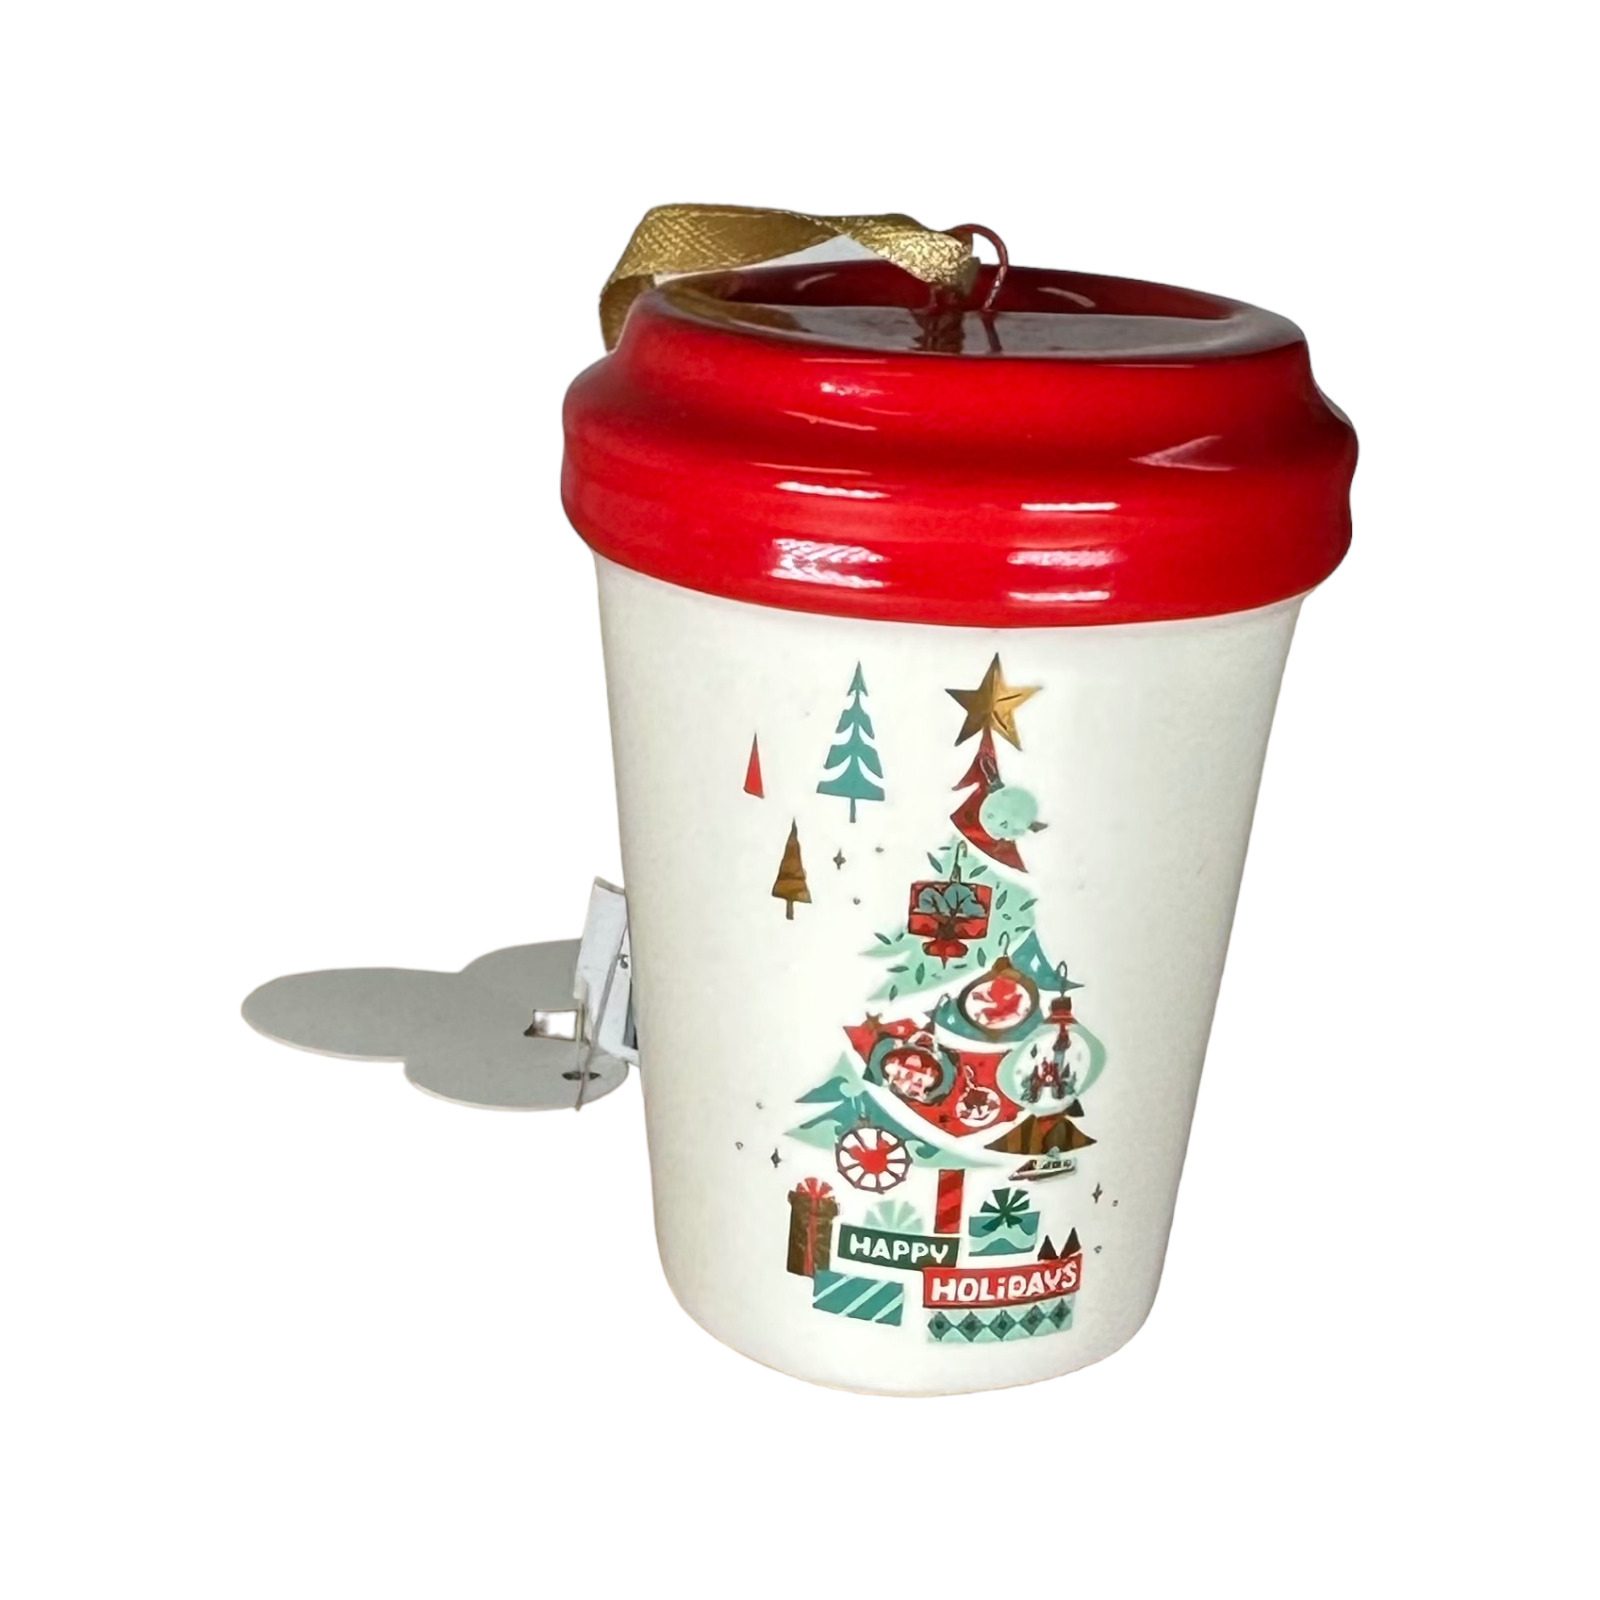 2019 Disney Parks Happy Holidays Starbucks Cup Ornament